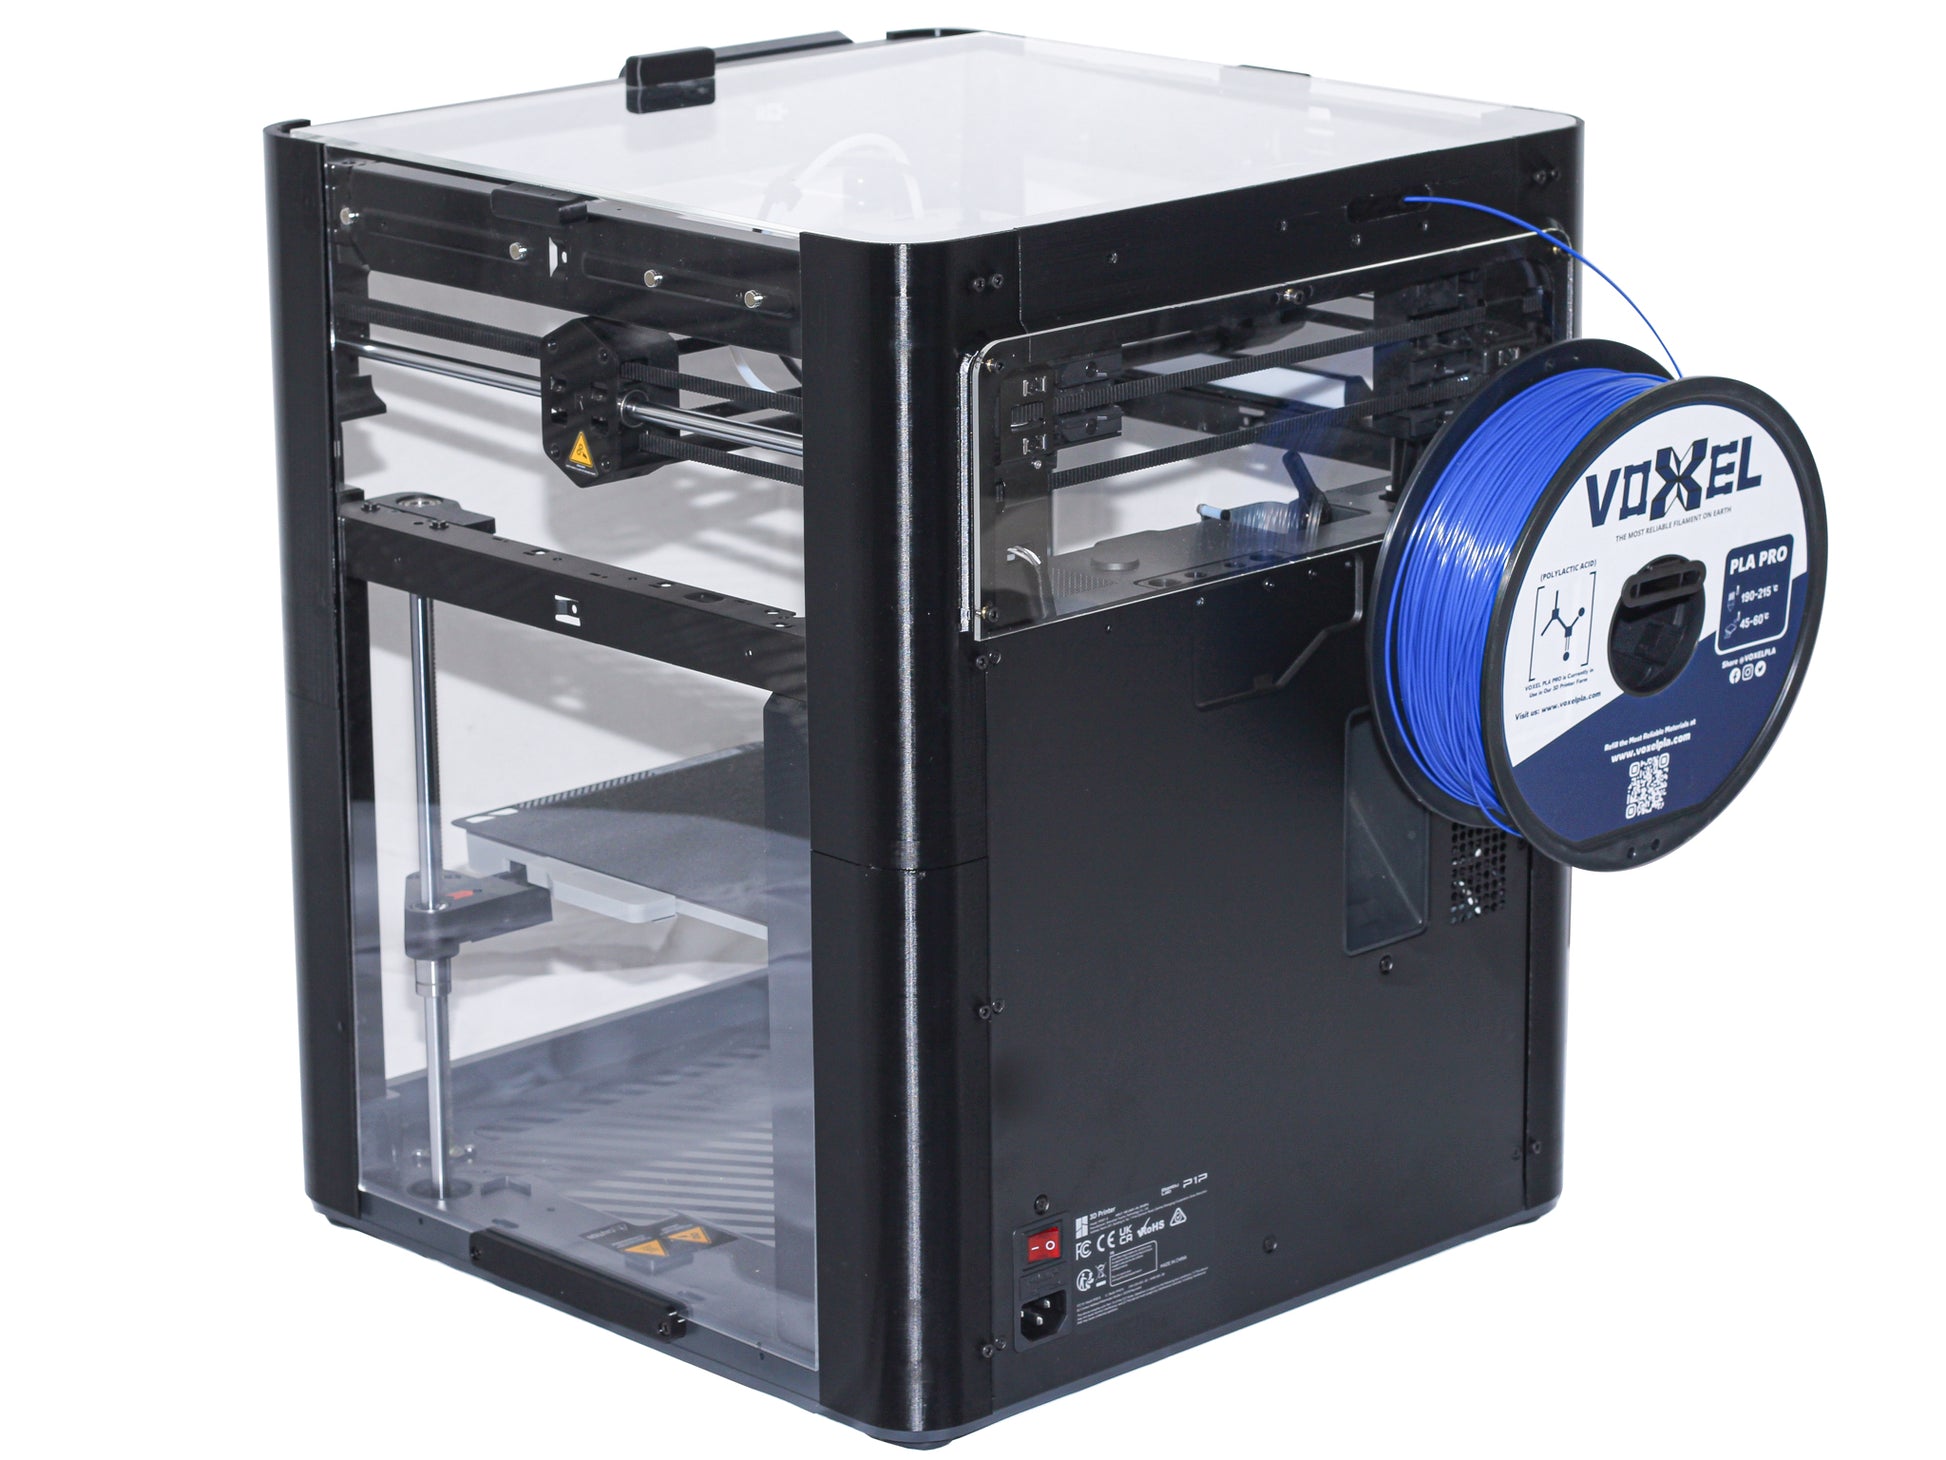 3D Printing Service Bambulab X1C 